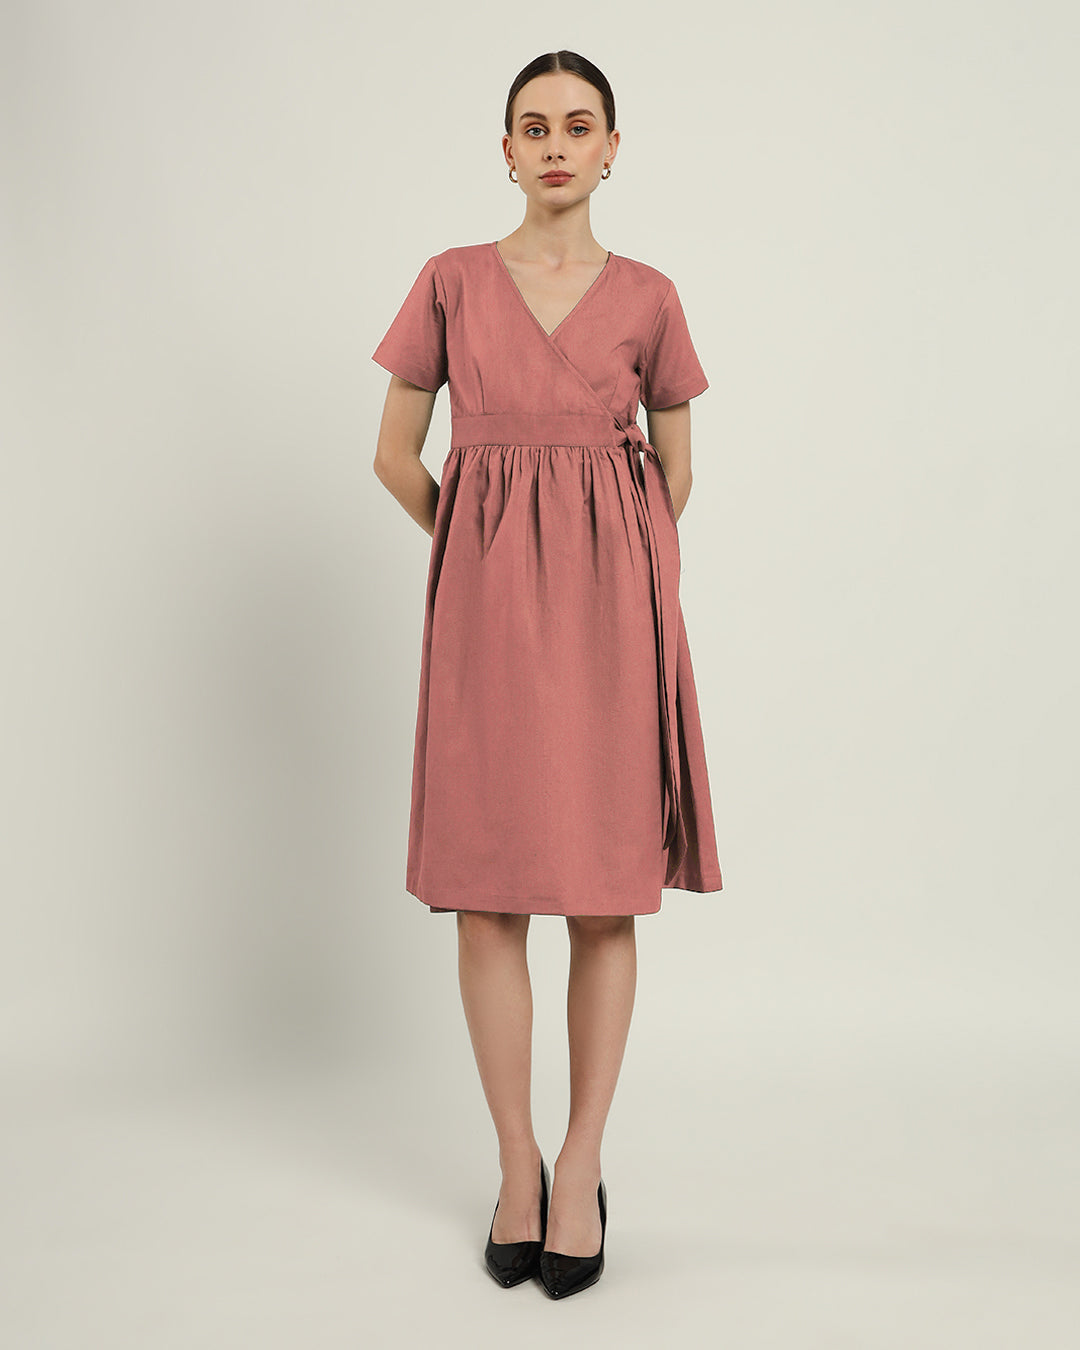 The Miyoshi Ivory Pink Dress